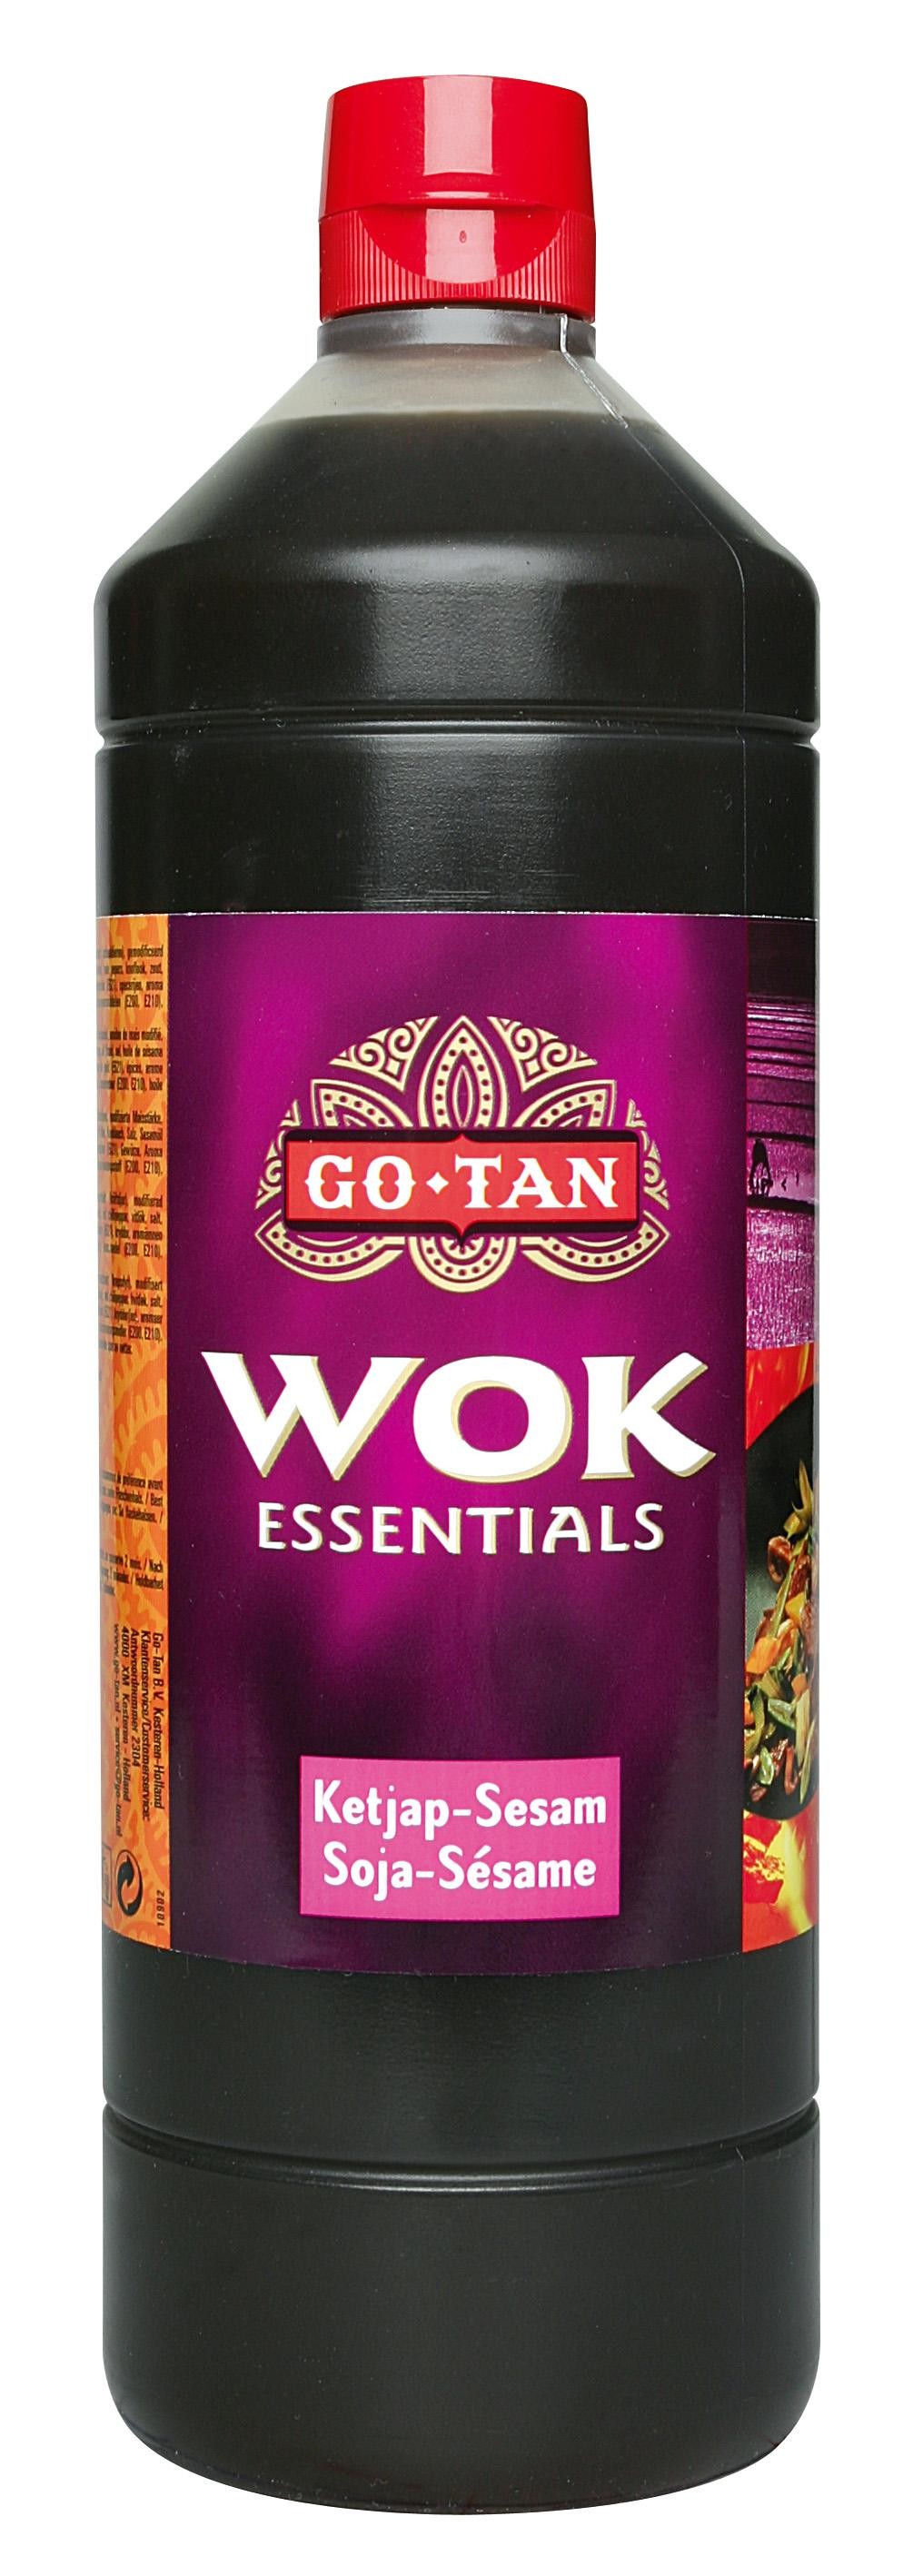 Wok essentials saus ketjap/soja sesam 1L Go Tan